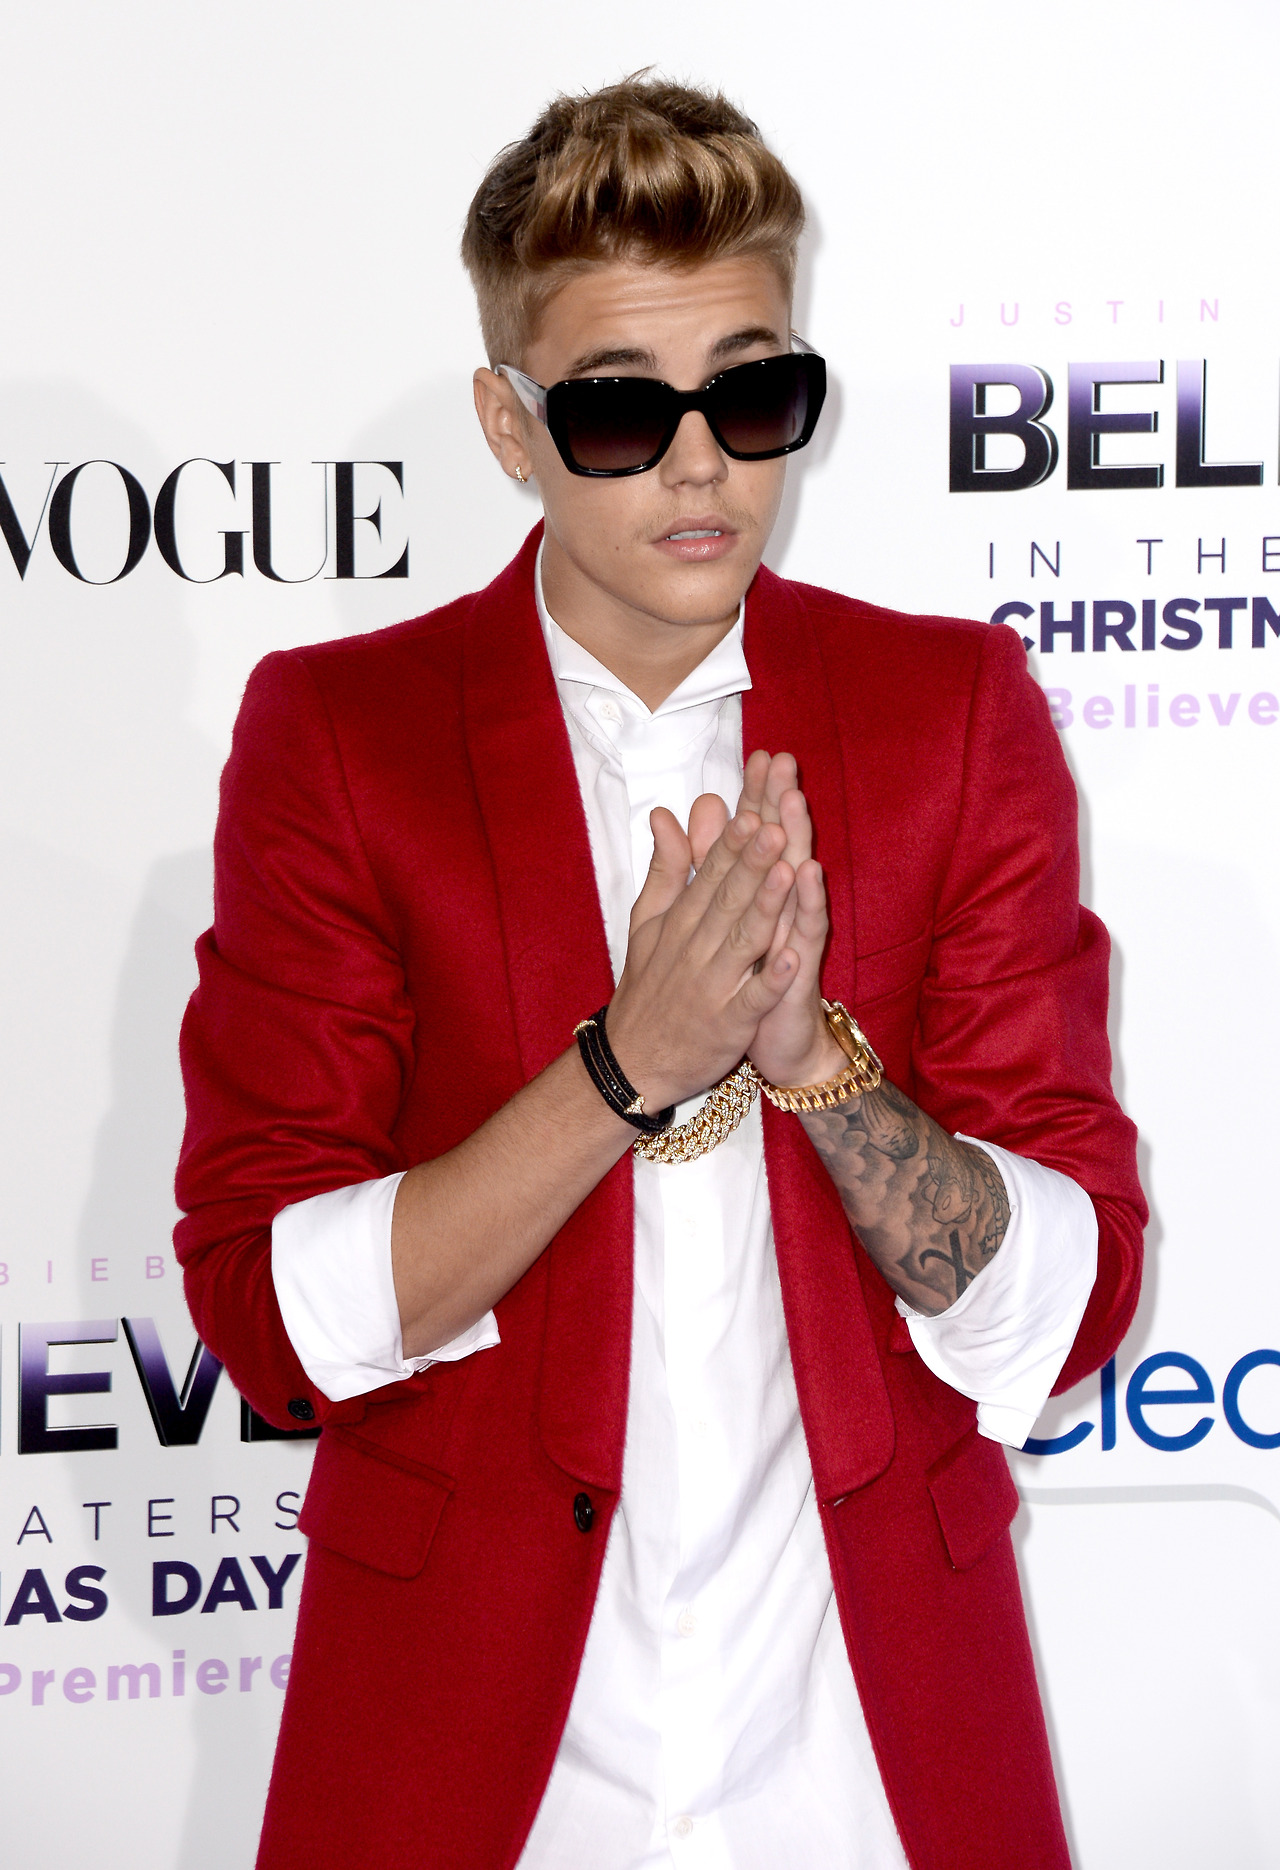 Premiere Of Open Road Films' "Justin Bieber's Believe" - Arrivals